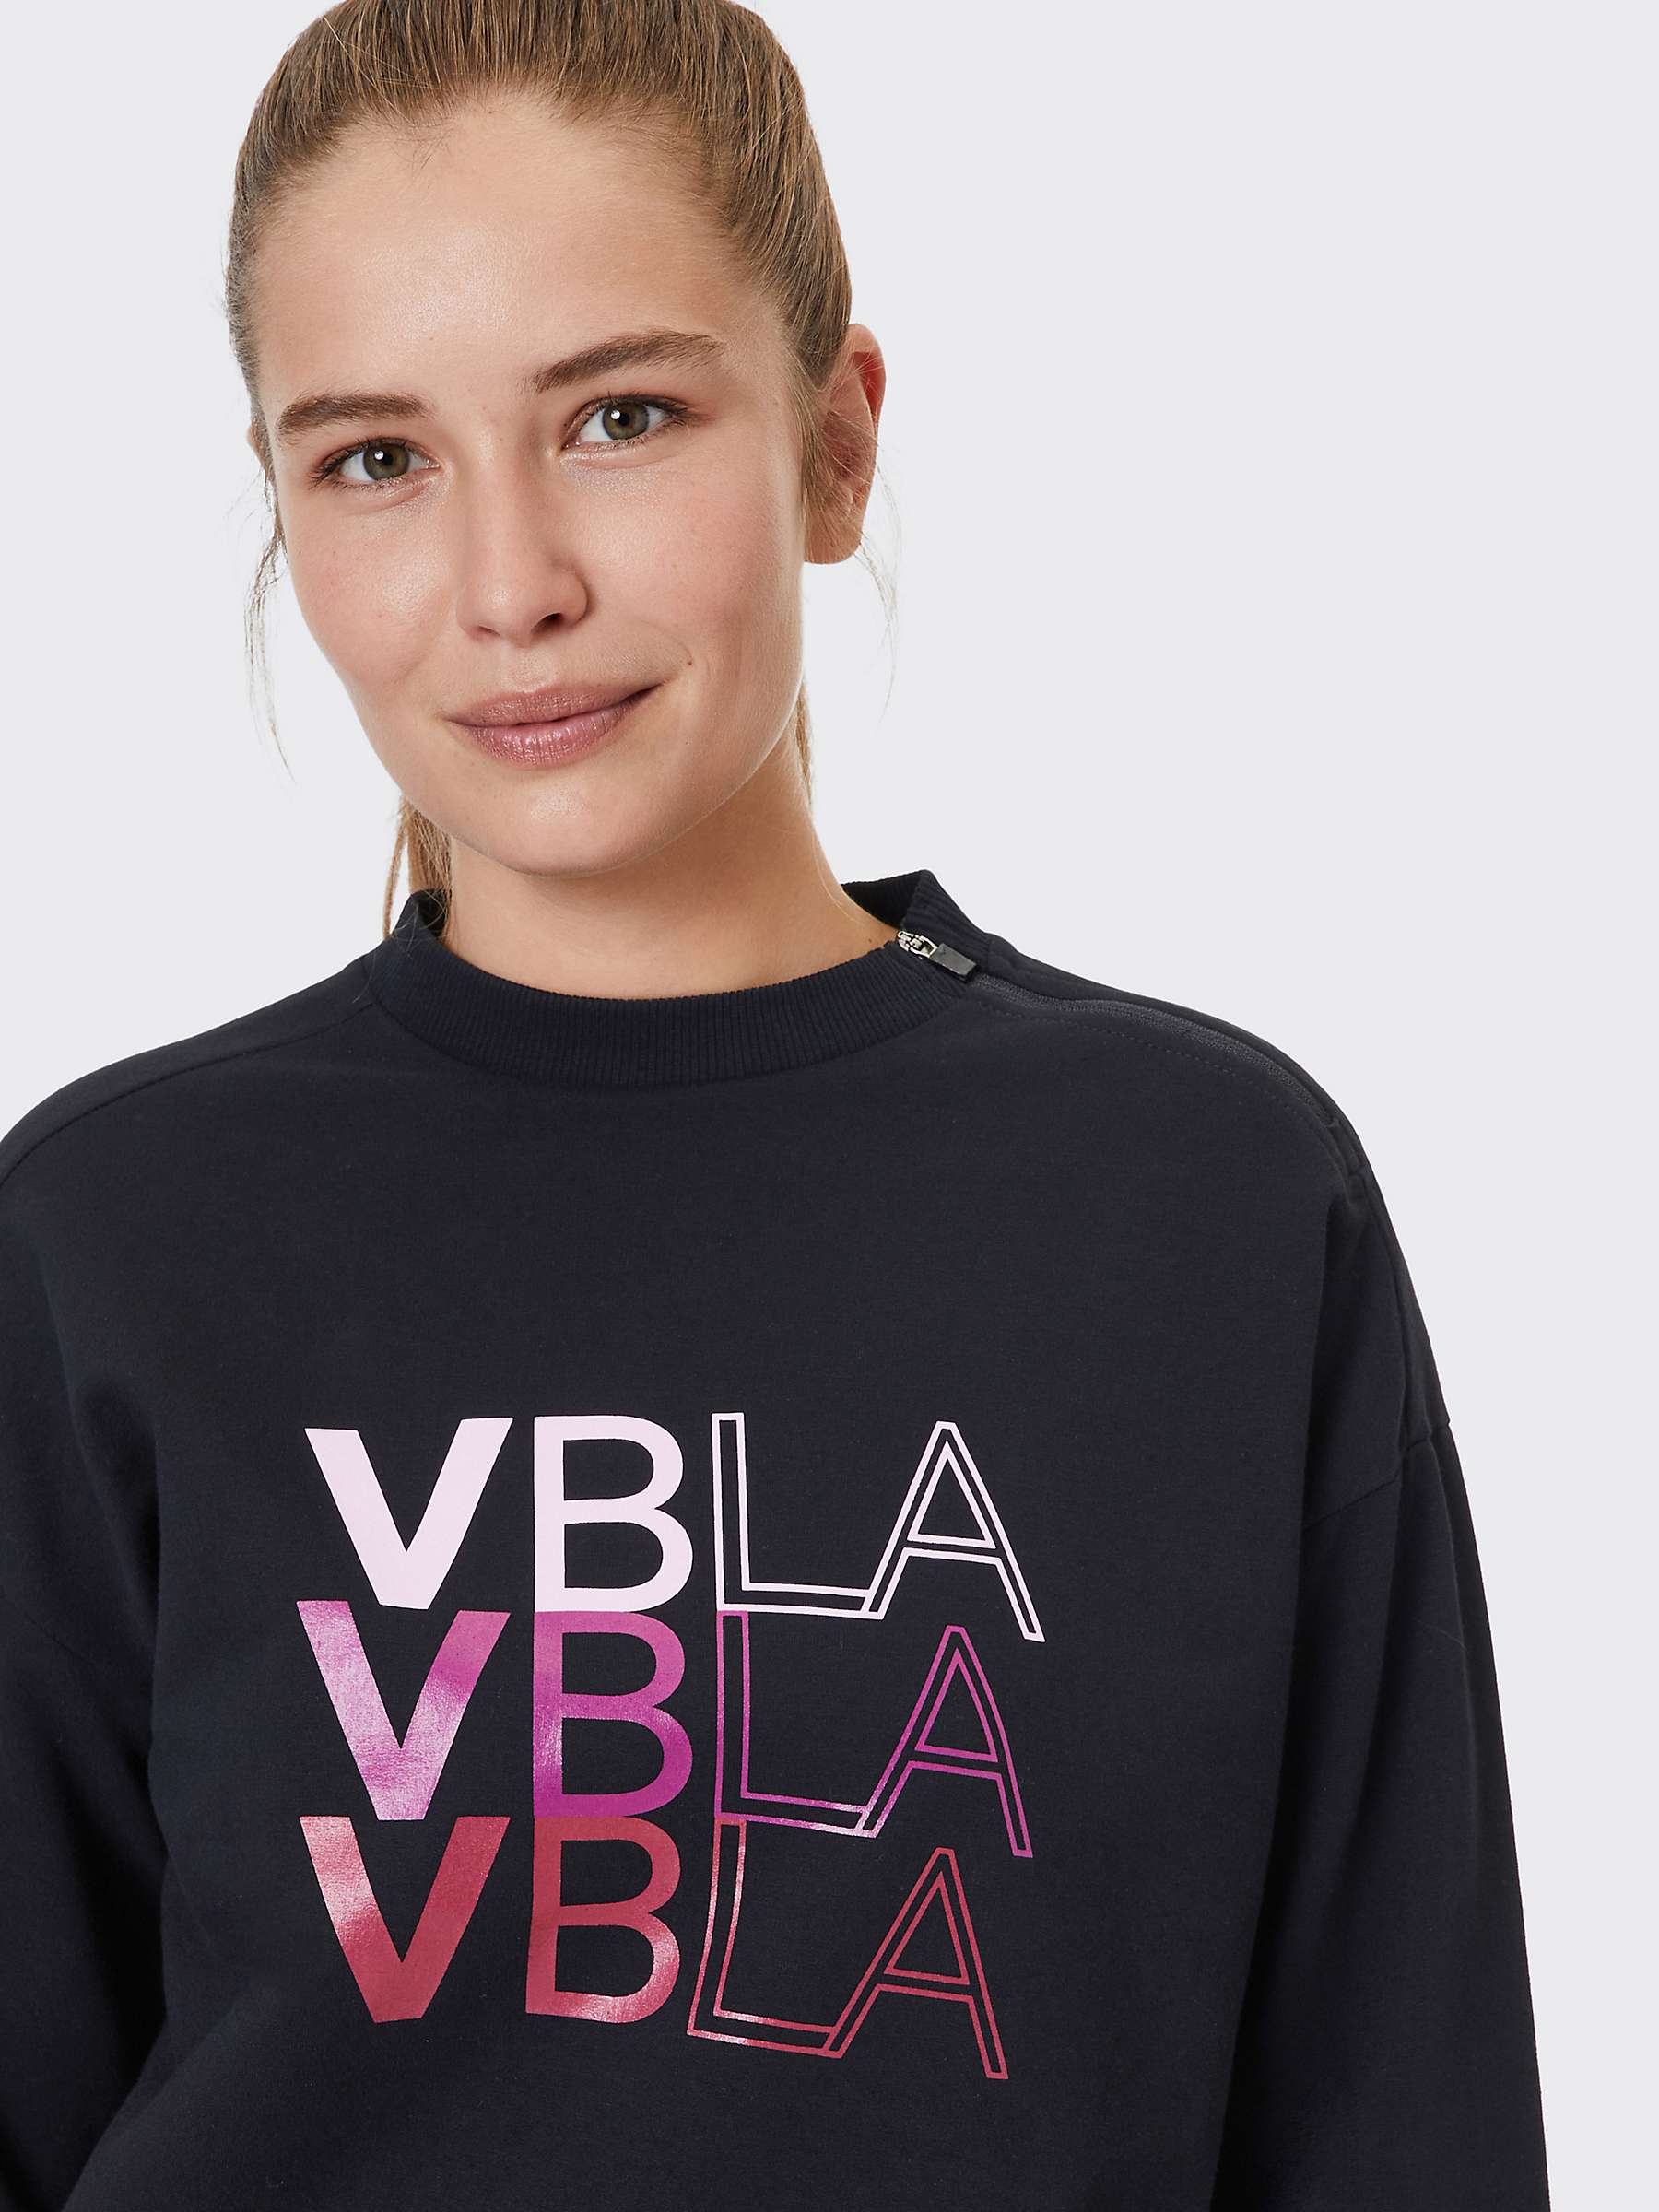 Buy Venice Beach Addison Women's Sports Sweatshirt, Black Online at johnlewis.com